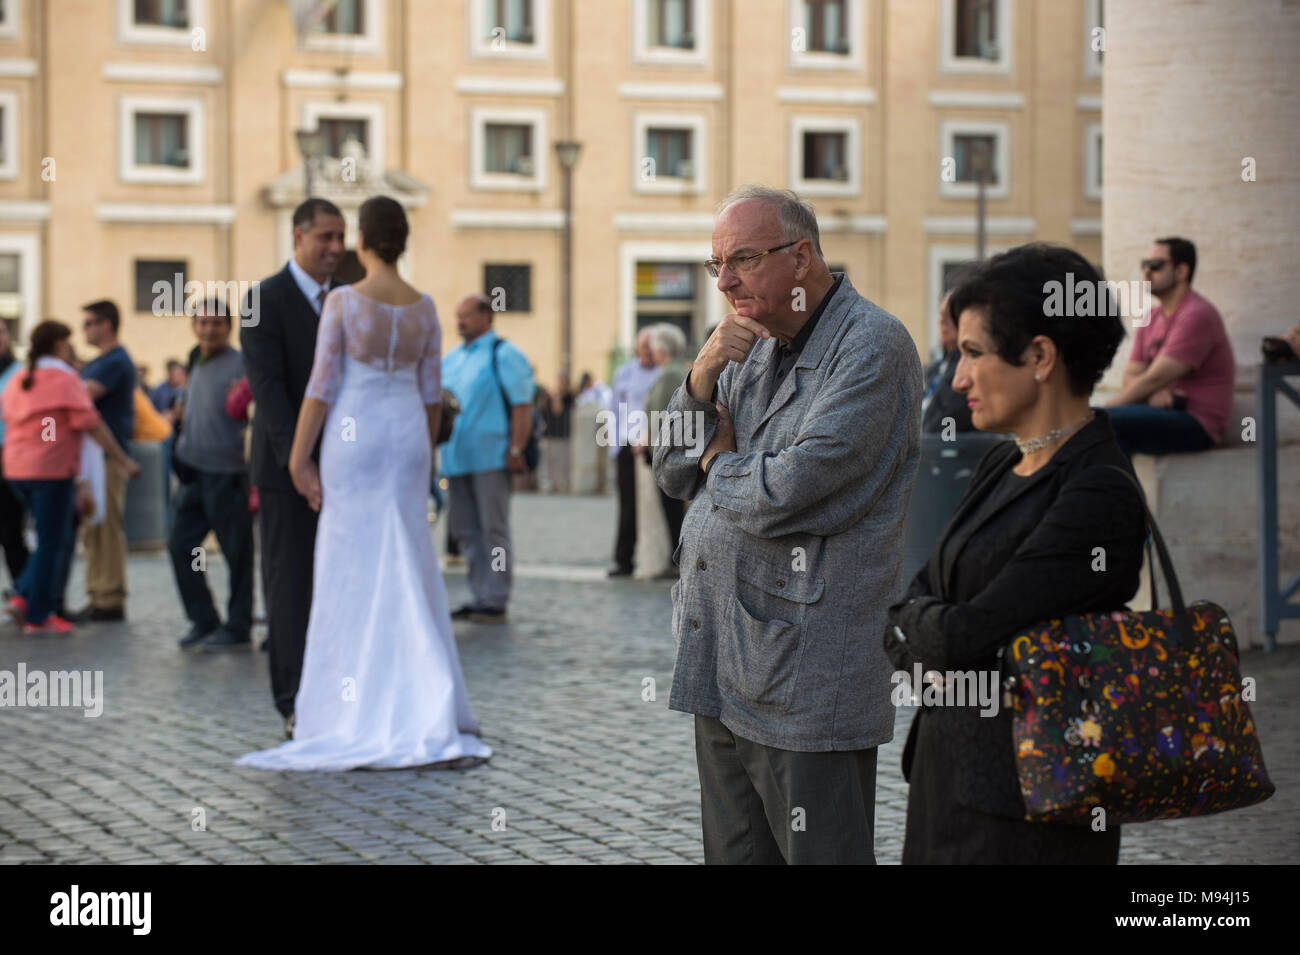 Vatikanstadt. Ein Ehepaar unter den Pilger an der Generalaudienz auf dem Petersplatz. Vatikan. Stockfoto